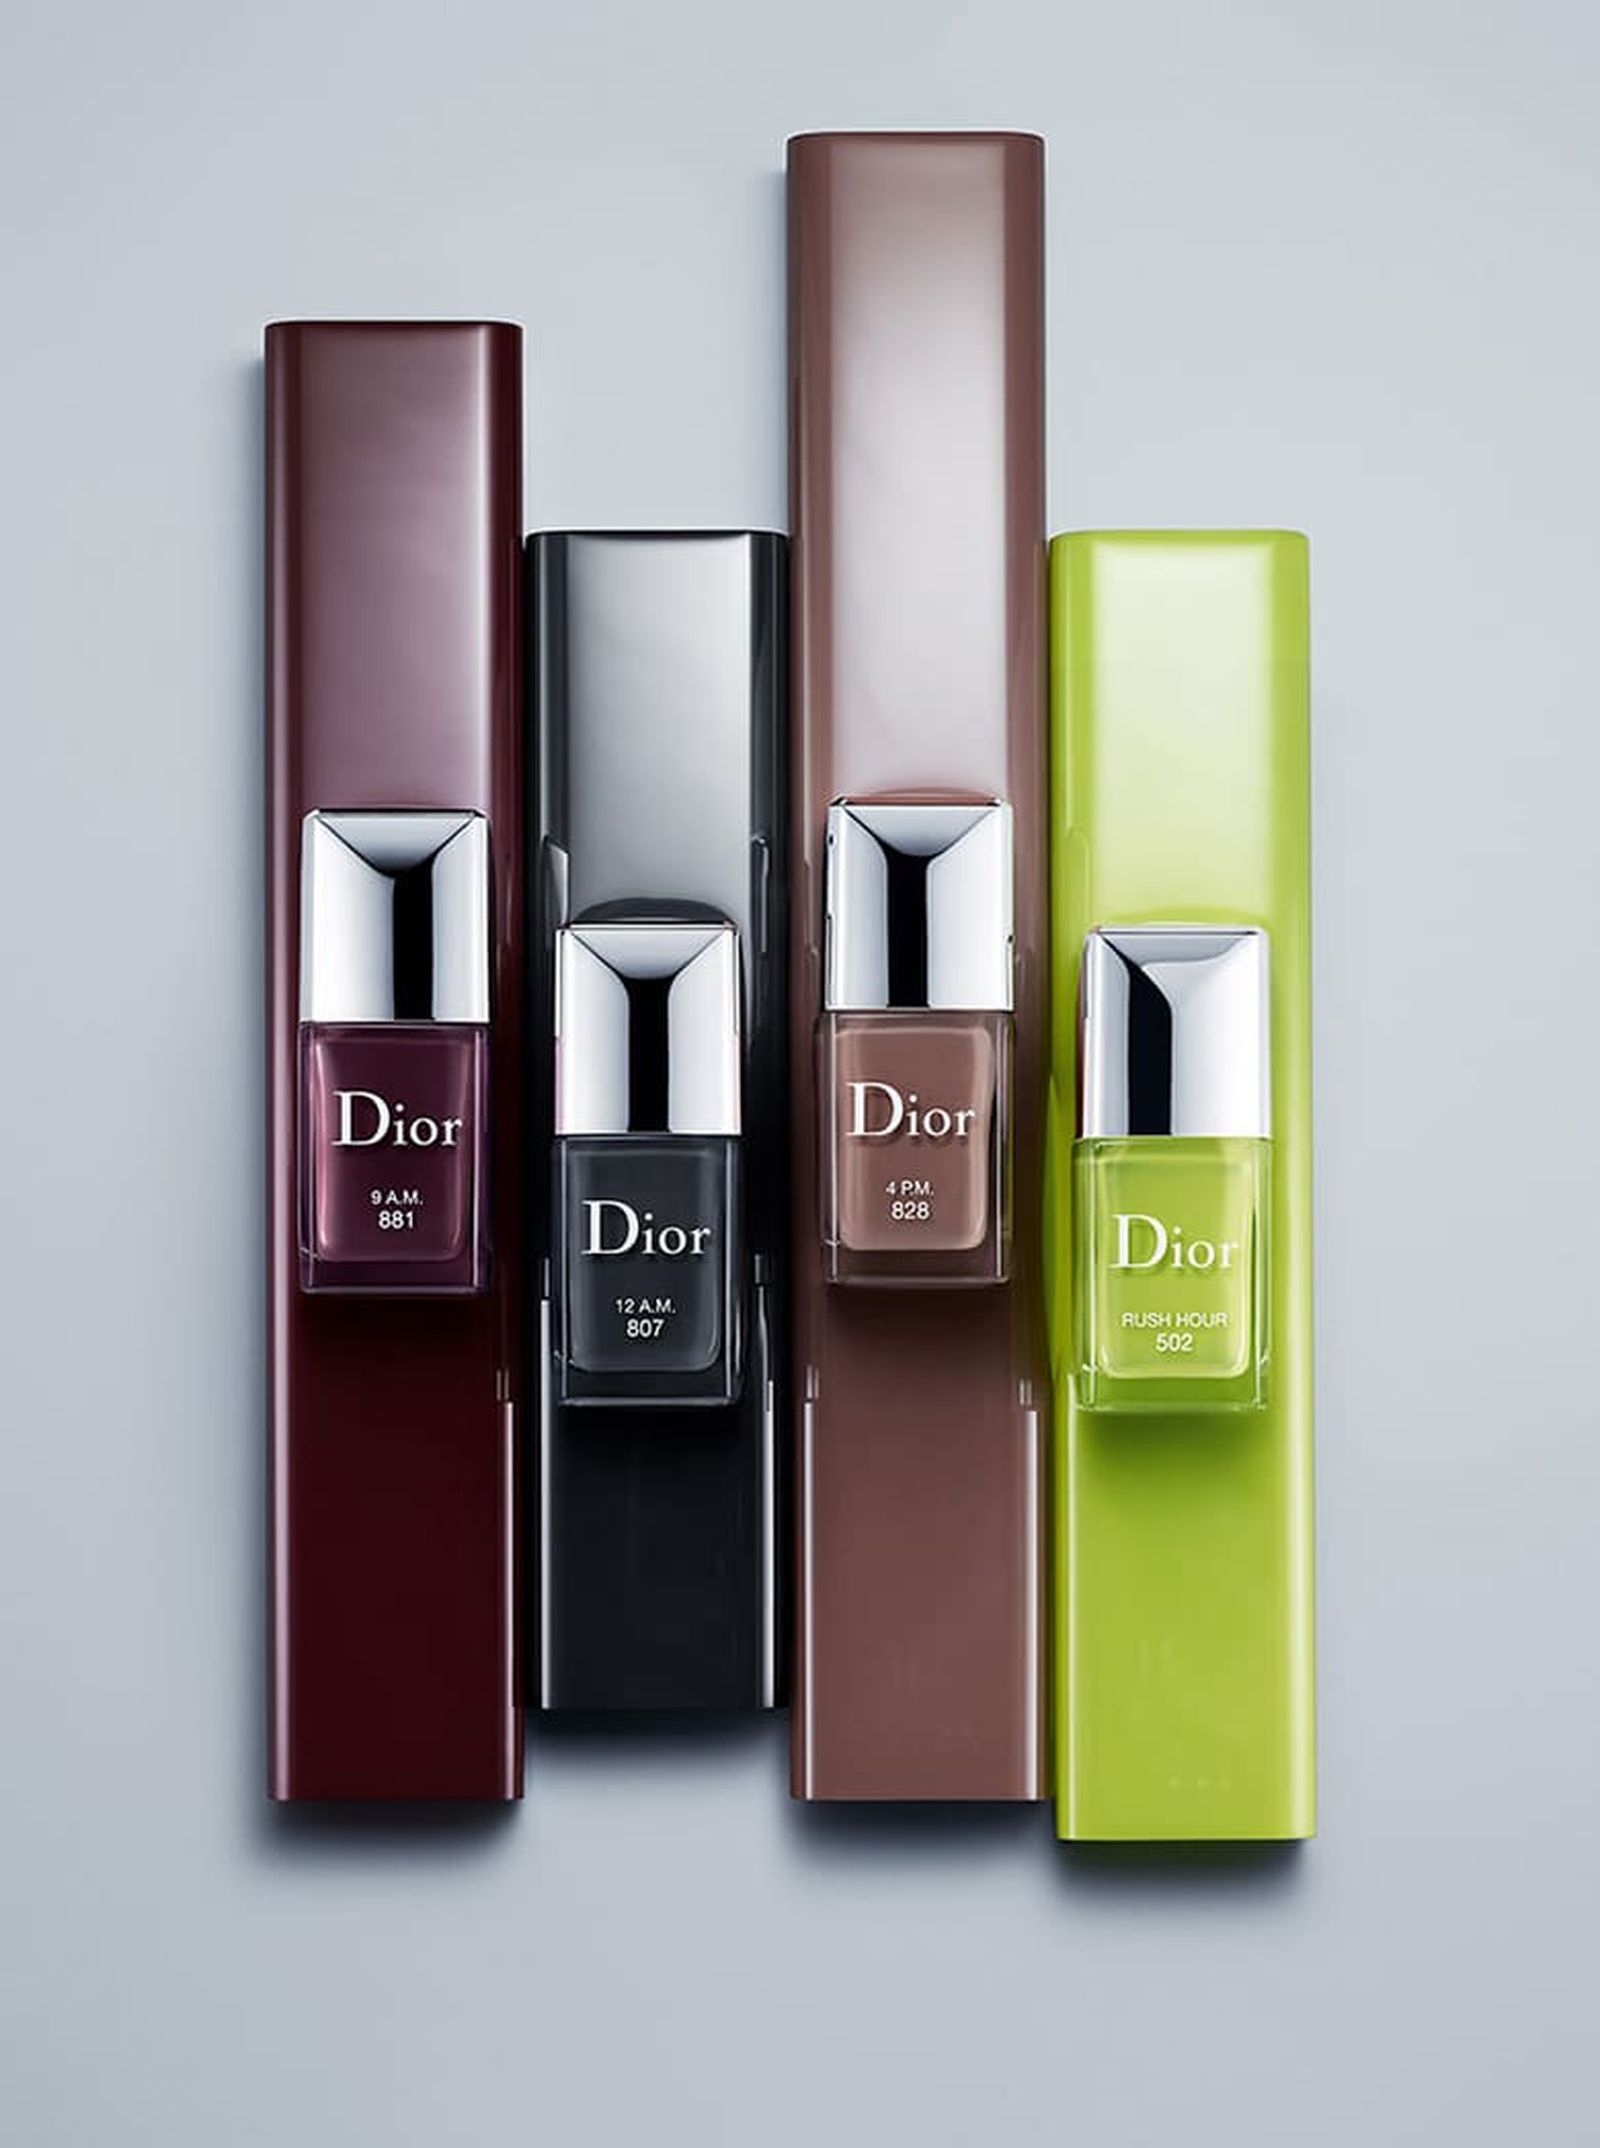 Dior, лак для ногтей Dior Vernis, оттенки: 9 A.M., 12 А.М., 4 P.M., Rush Hour